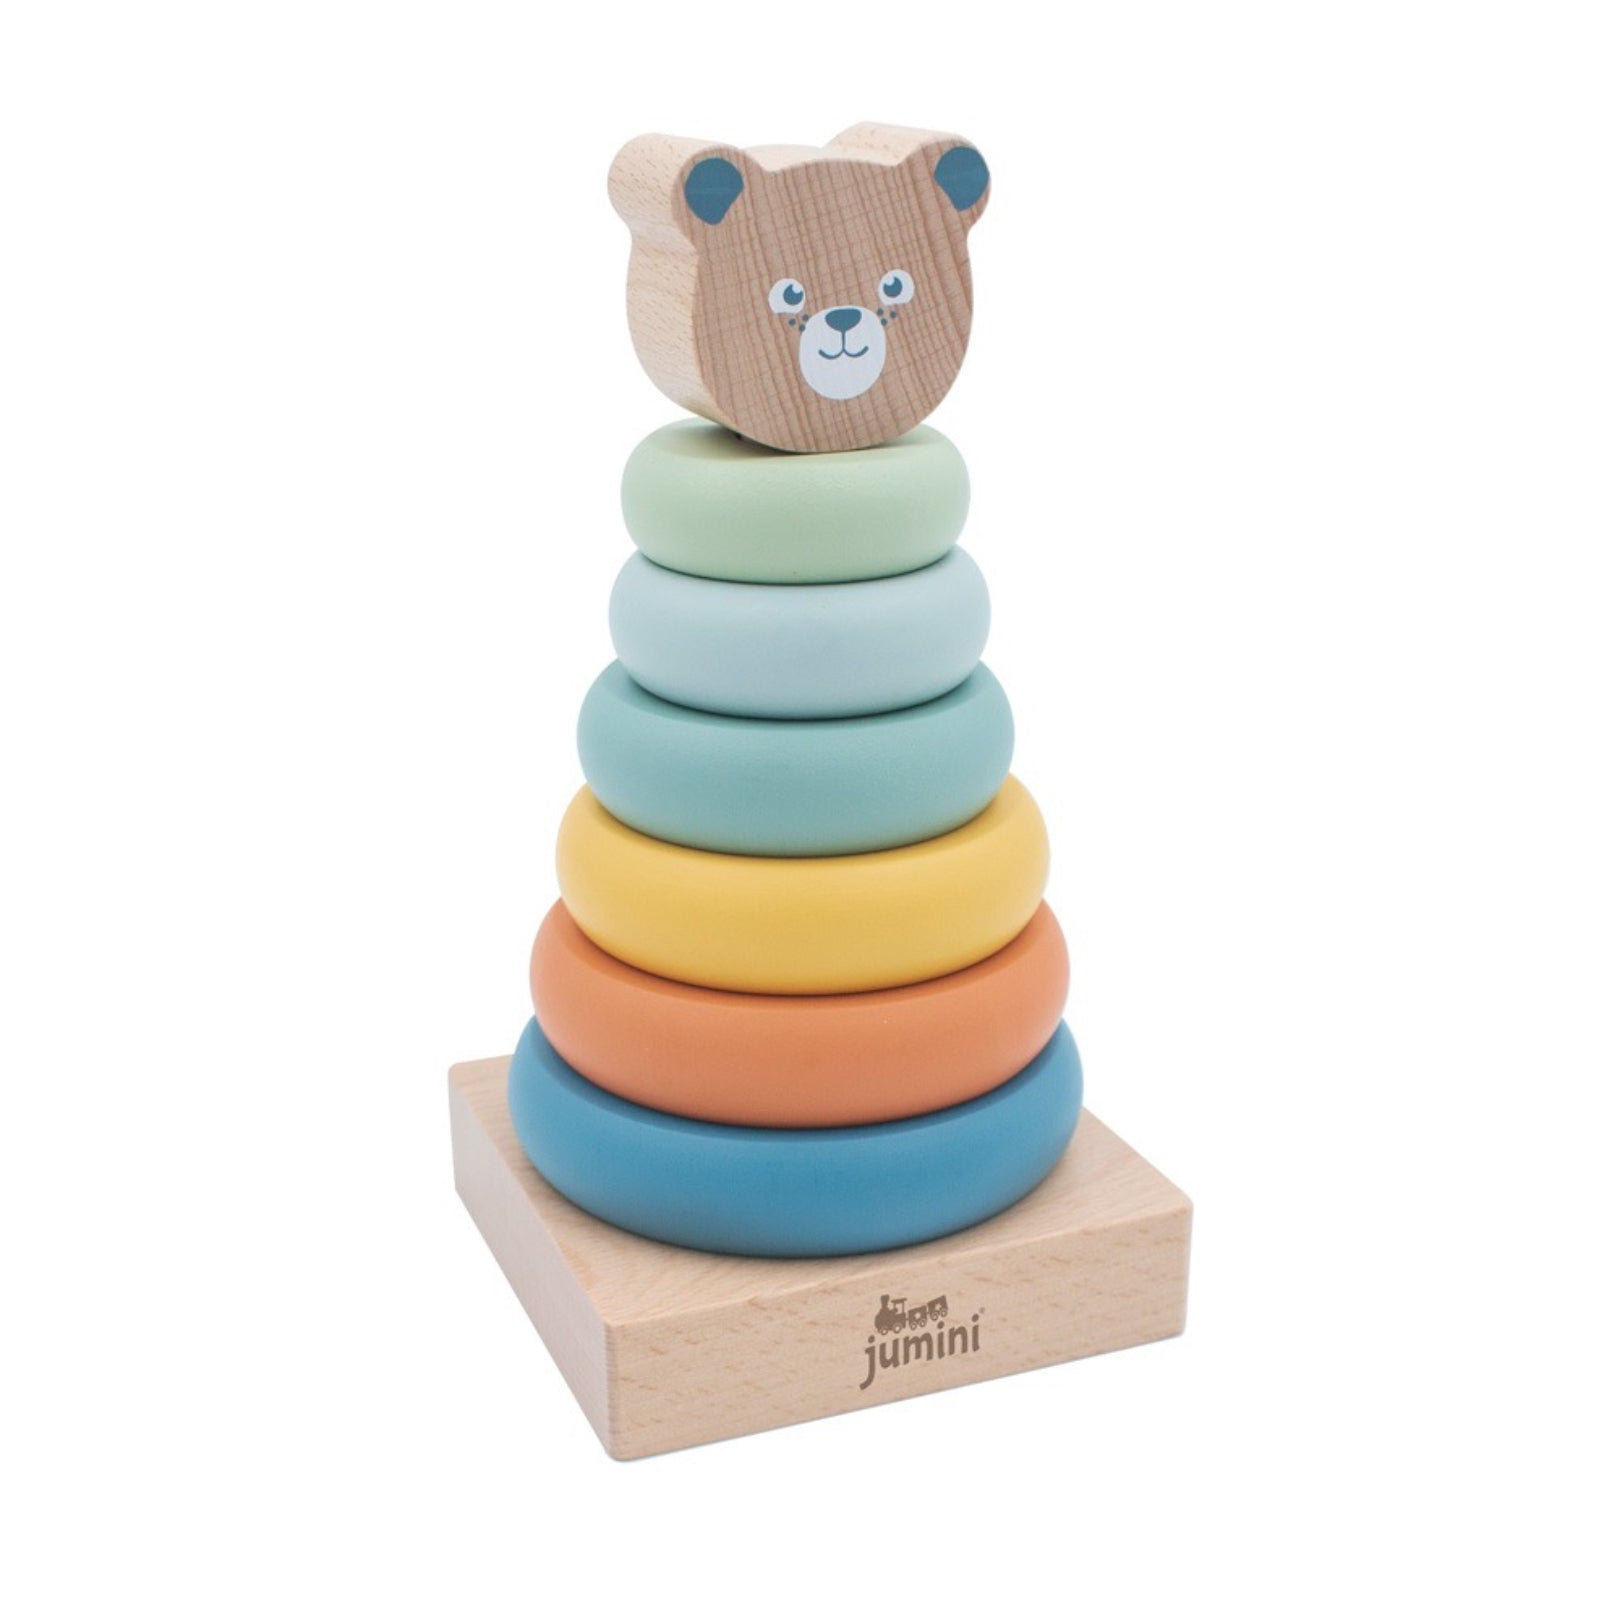 Jumini Wooden Bear Stacker Toy